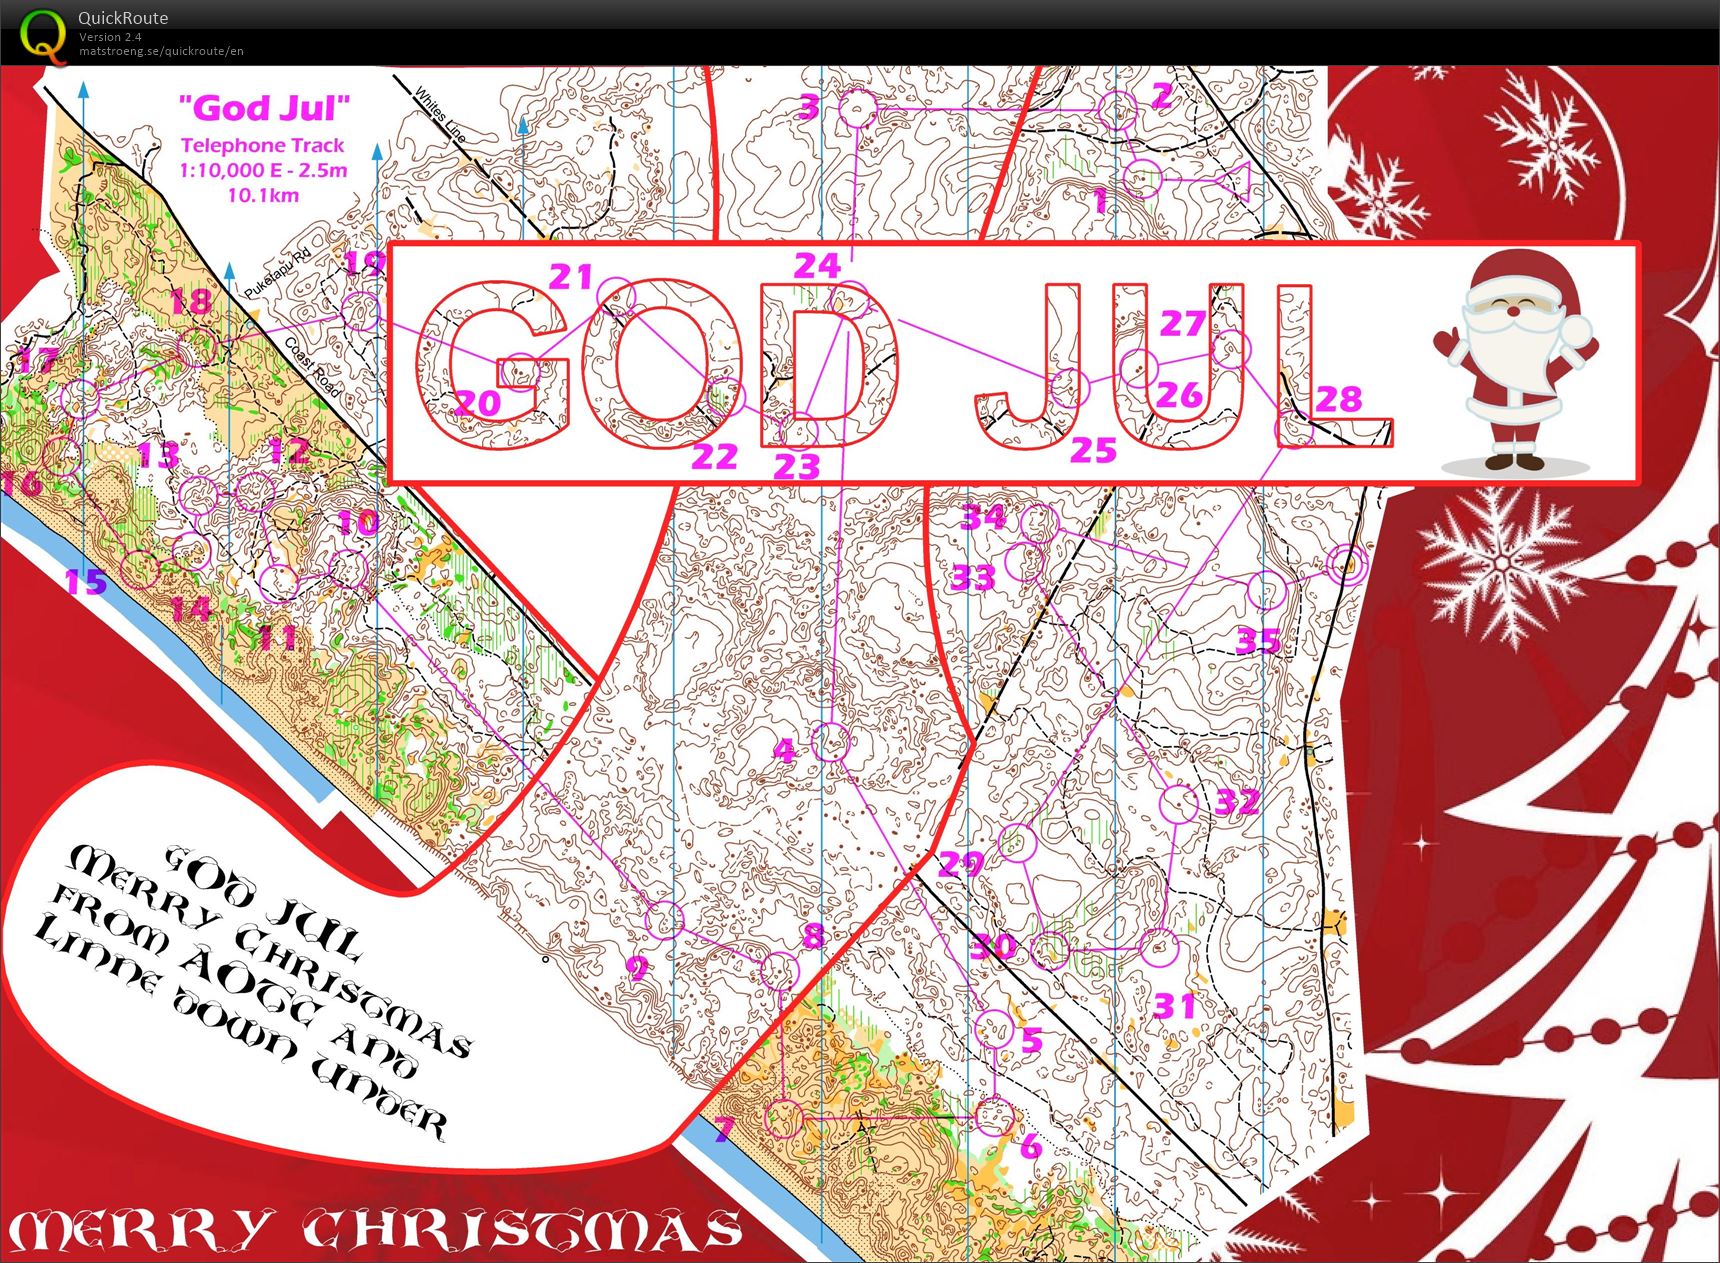 God Jul - Christmas Eve Training (24.12.2014)